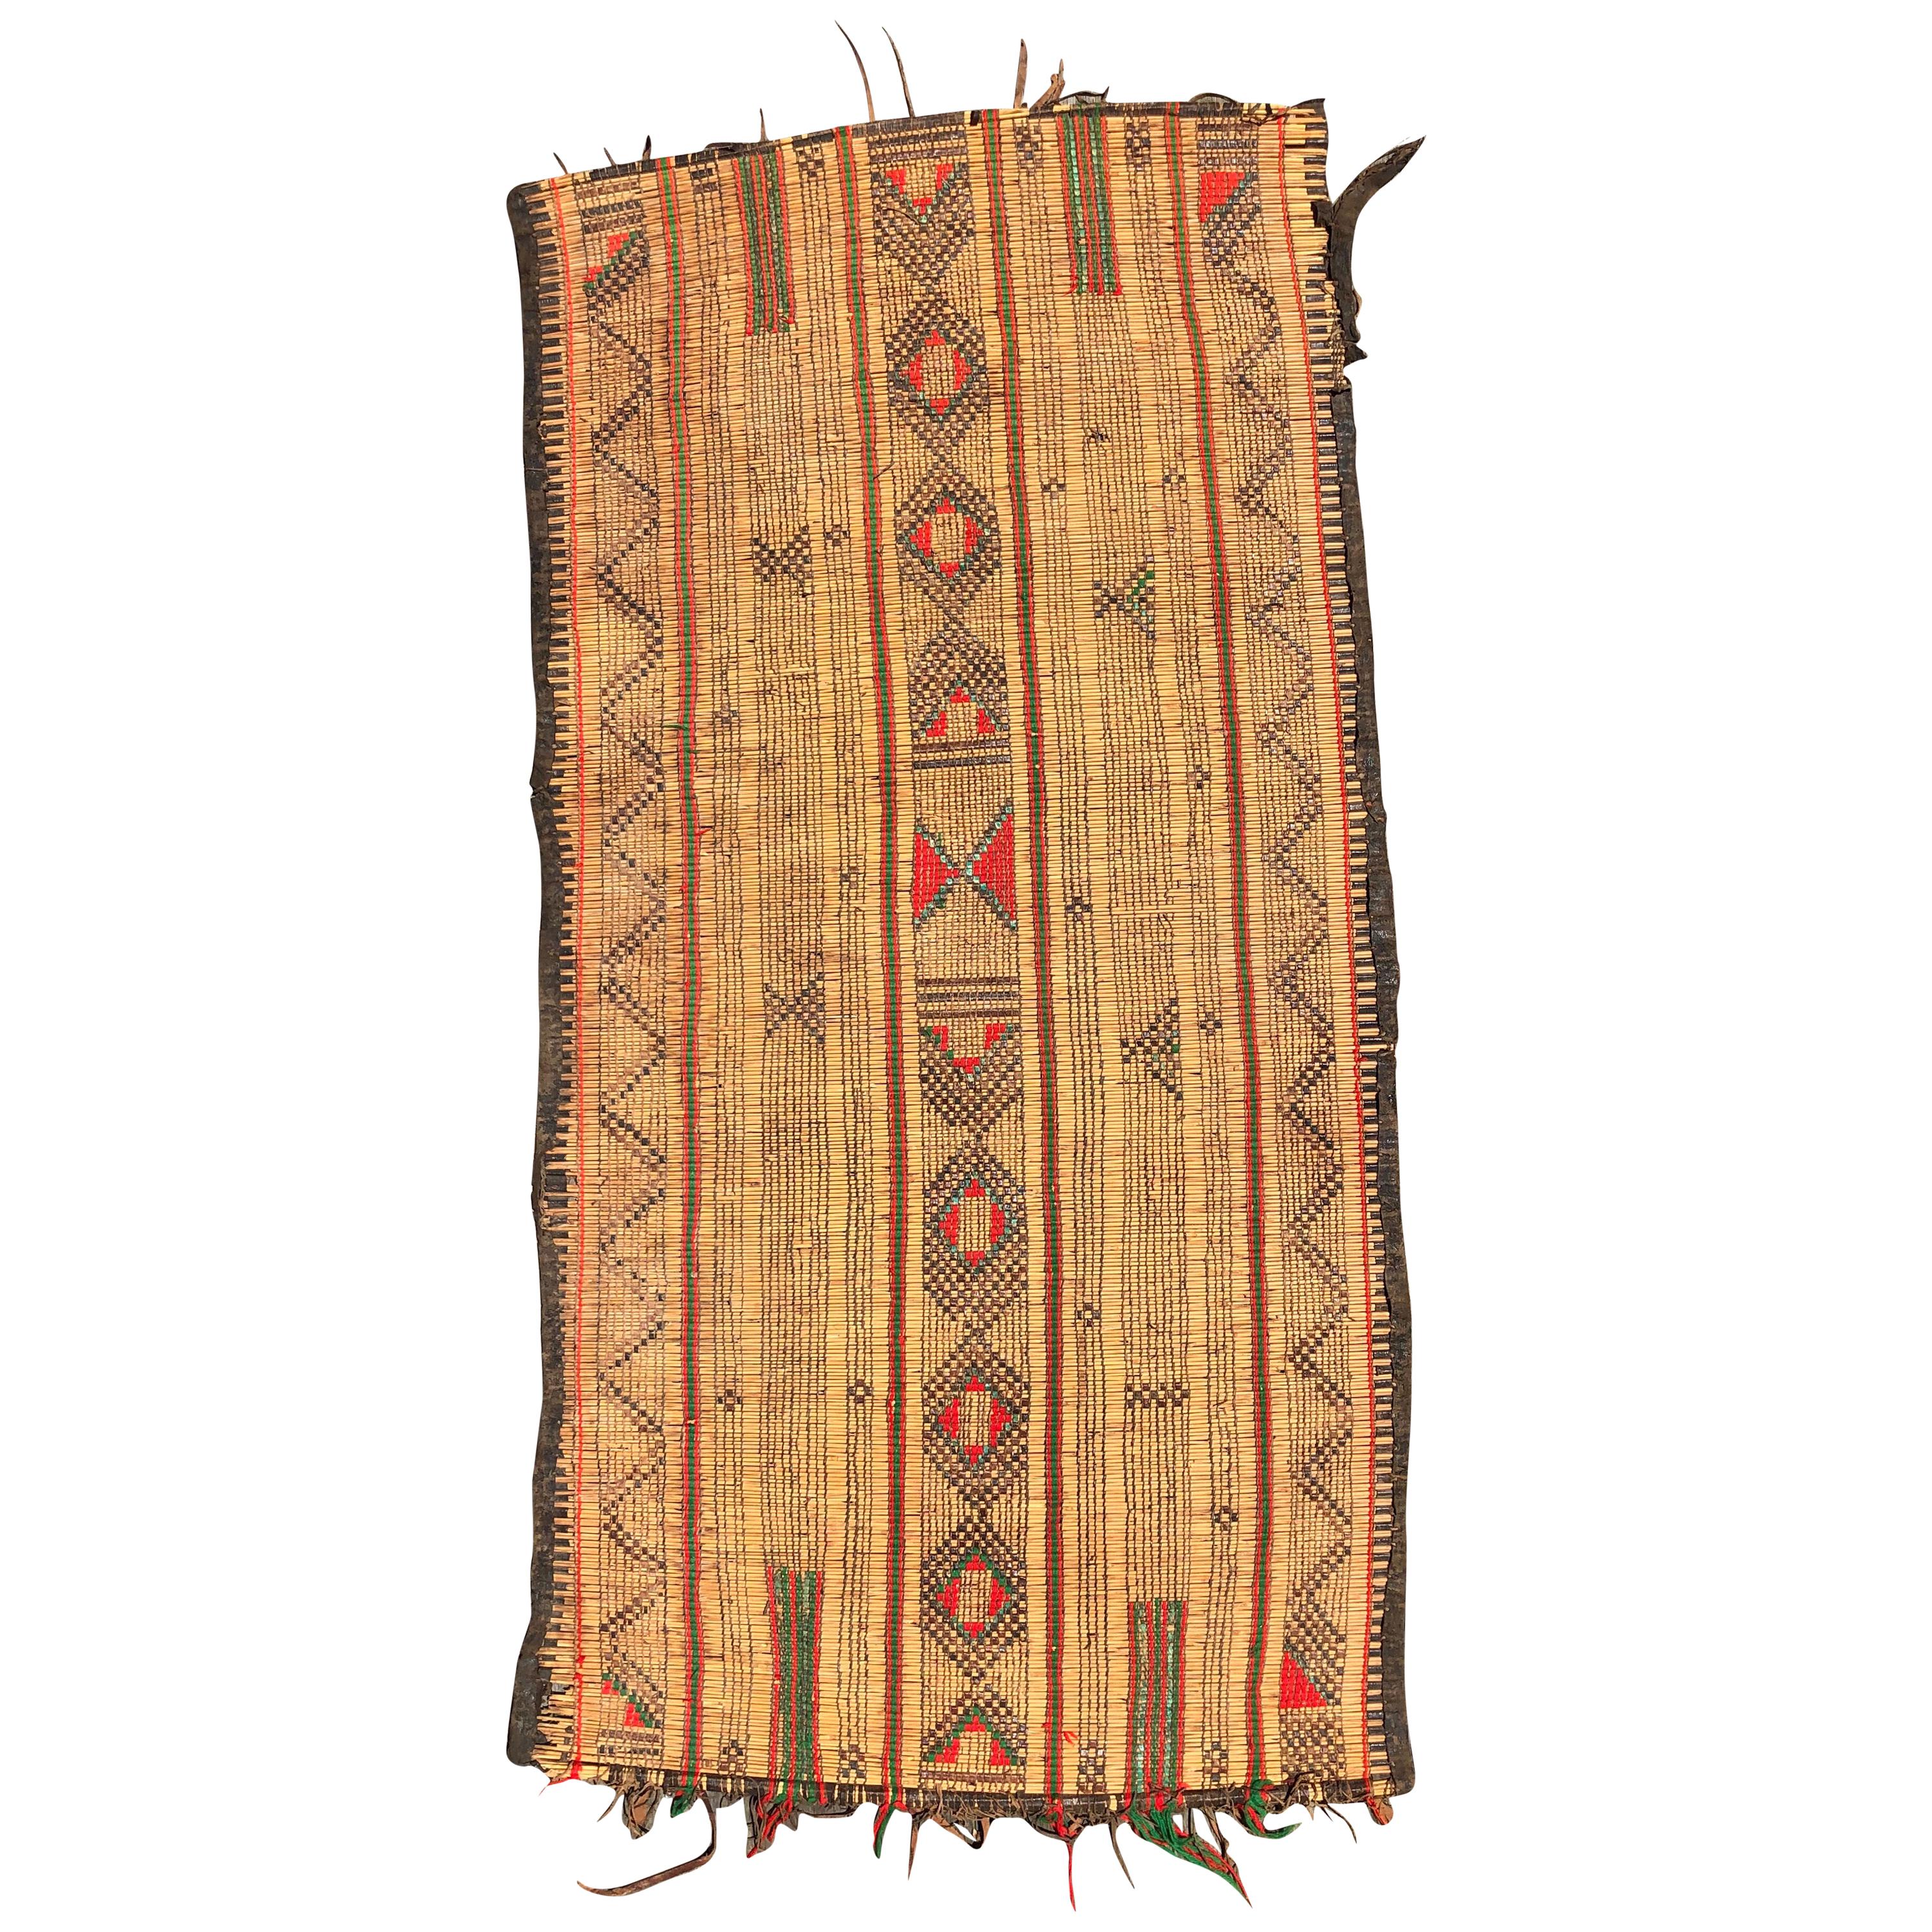 Vintage Tuareg Reed Mat - Handwoven African Tribal Rug from Sahara Desert